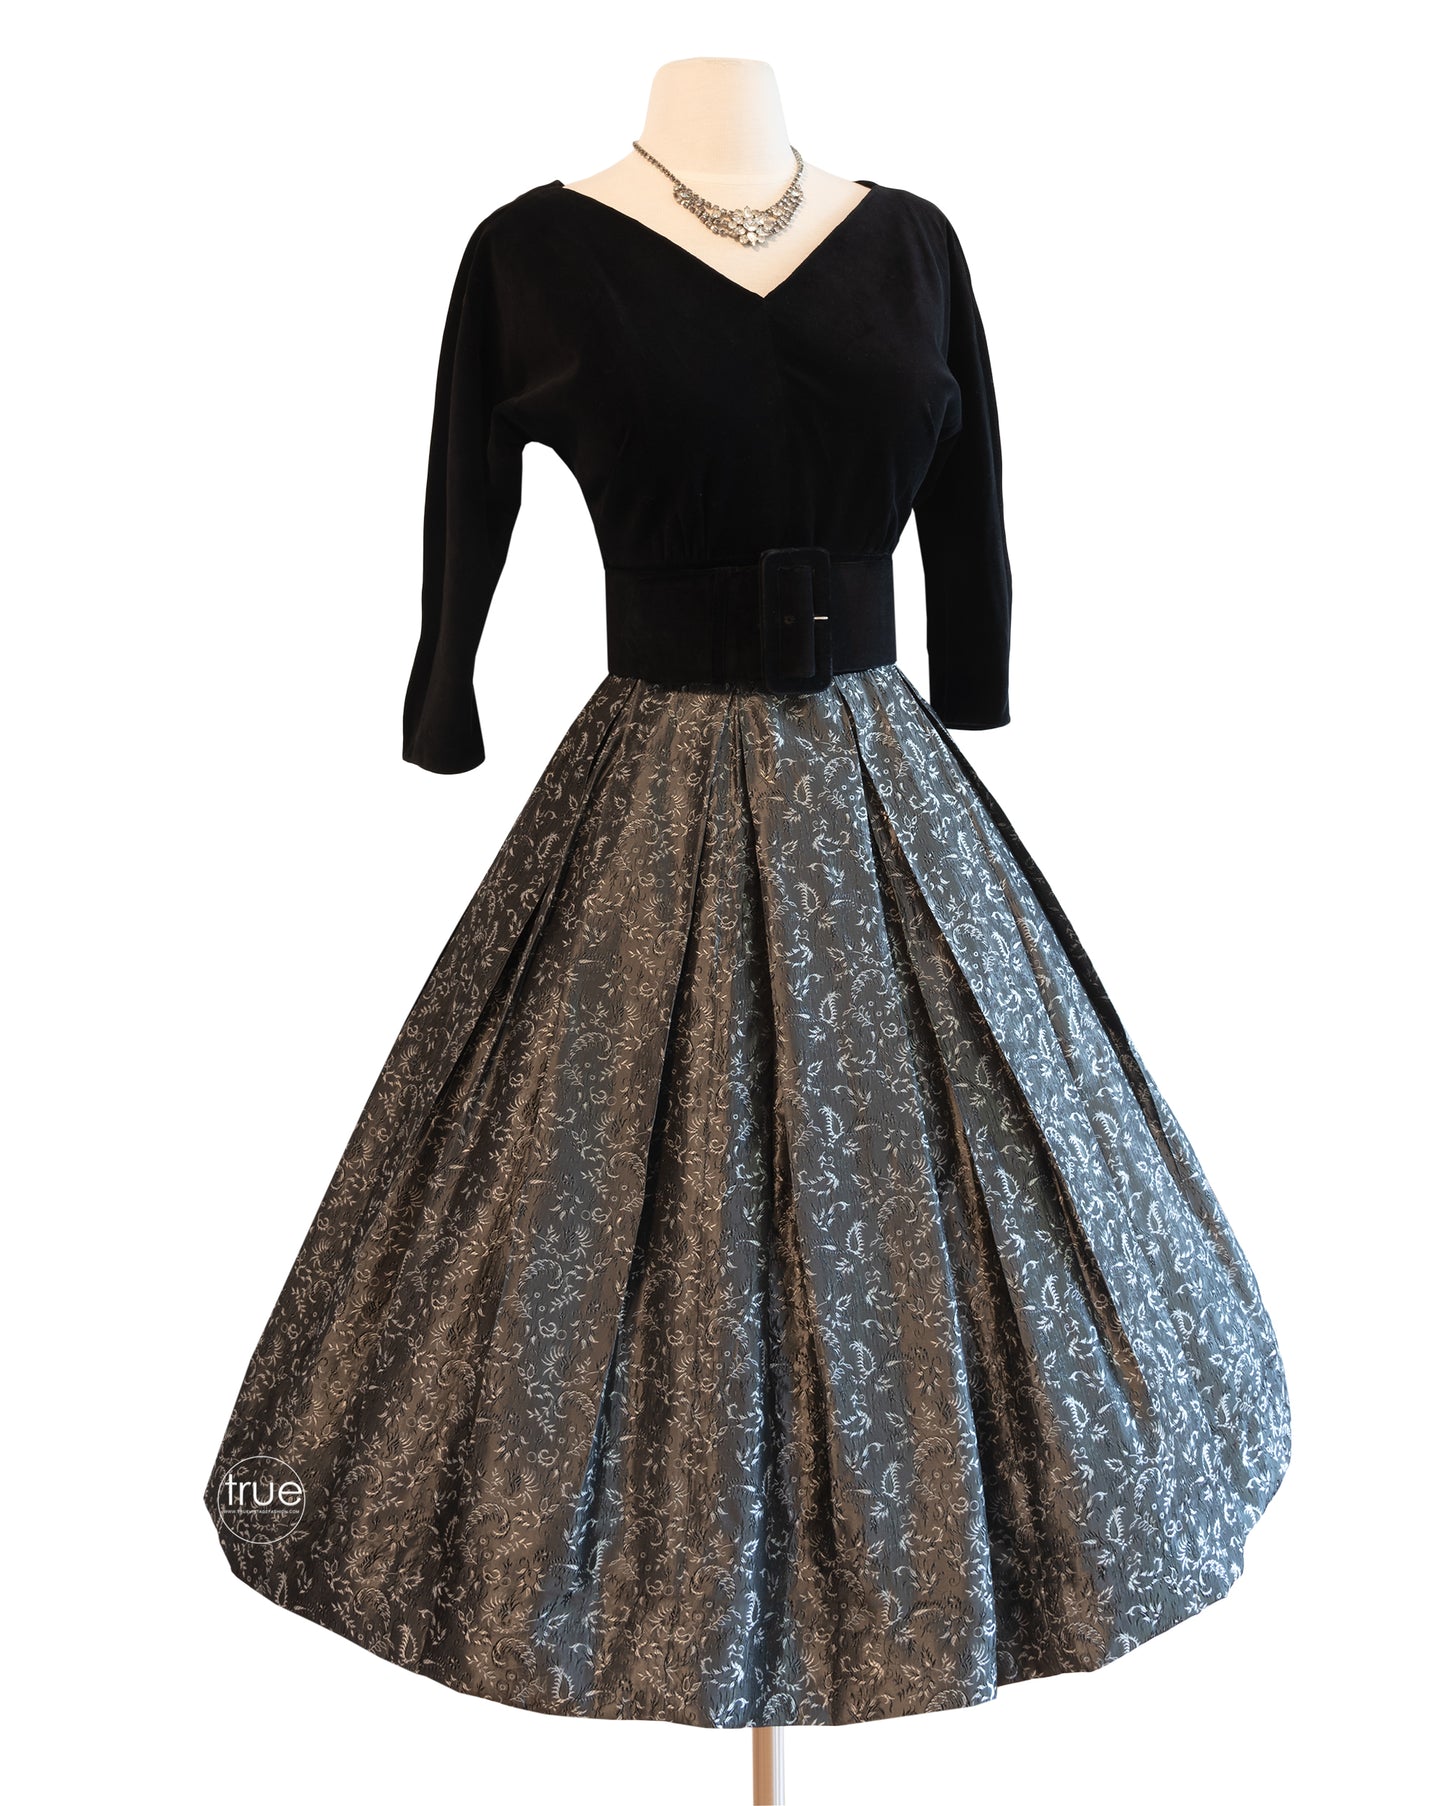 vintage 1950's dress ...classic beauty Suzy Perette velvet bodice & metallic gray jacquard skirt